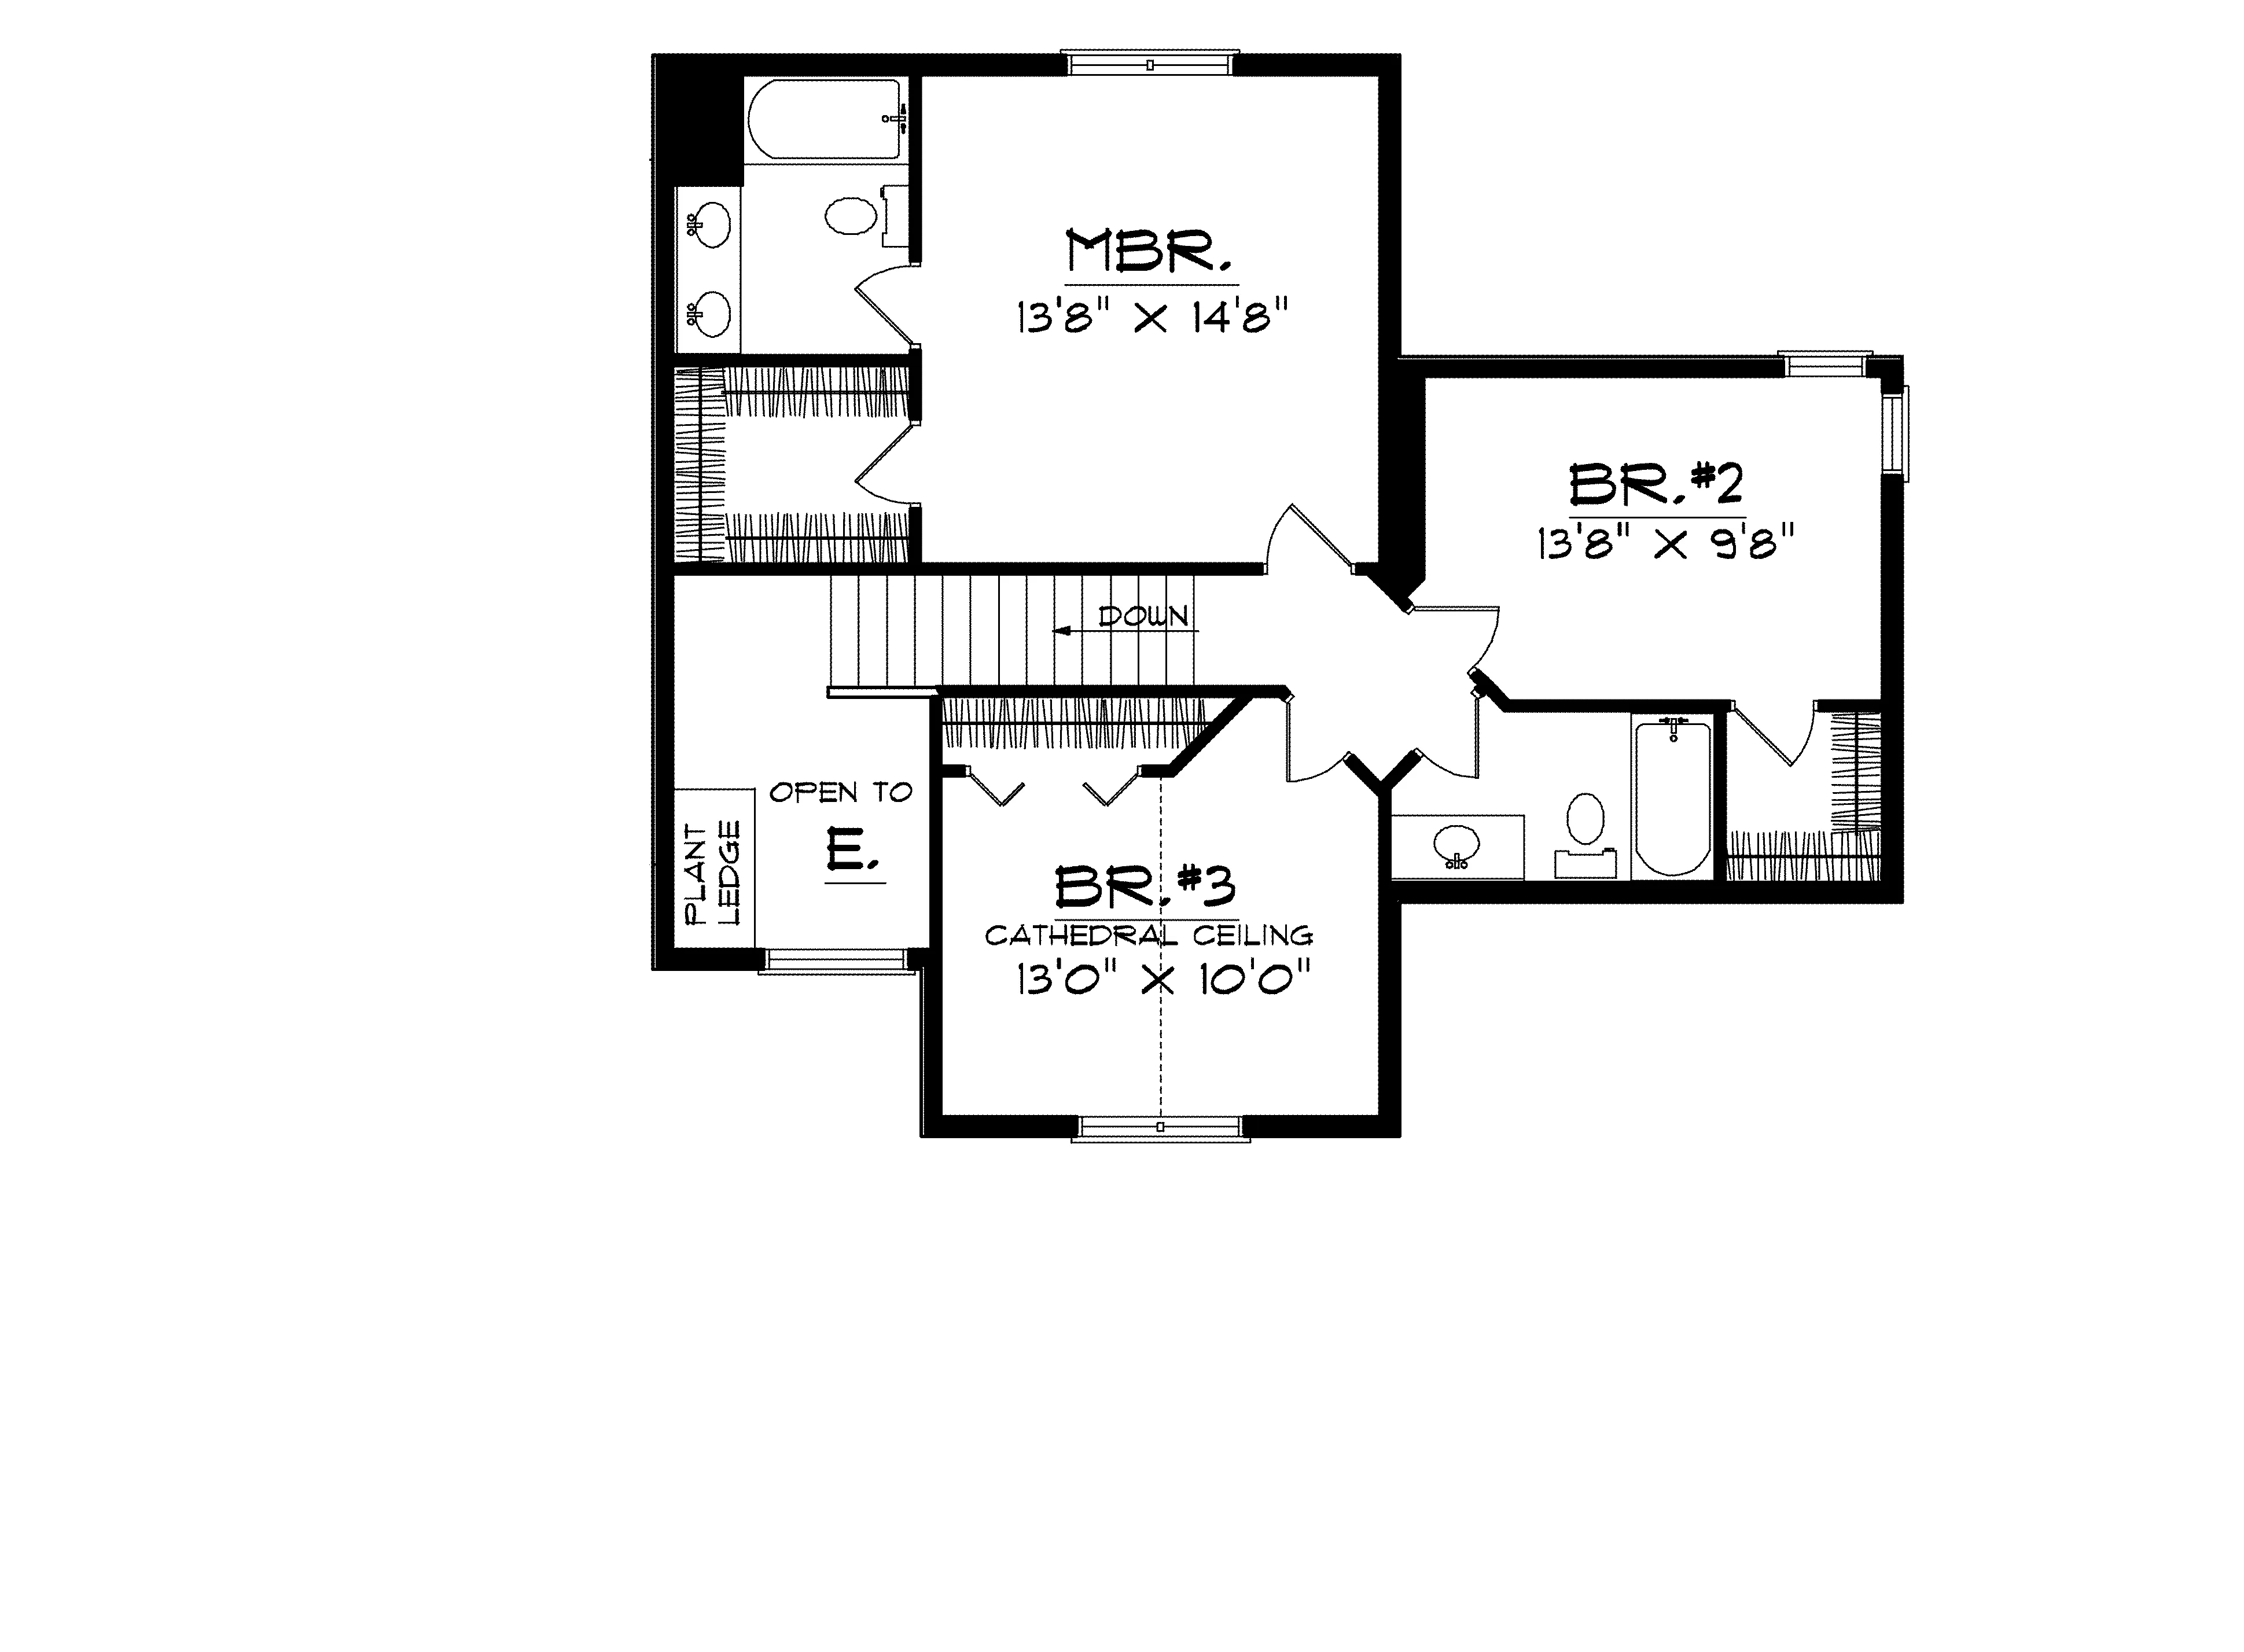 Traditional House Plan Second Floor - Mason Green Traditional Home 051D-0201 - Shop House Plans and More